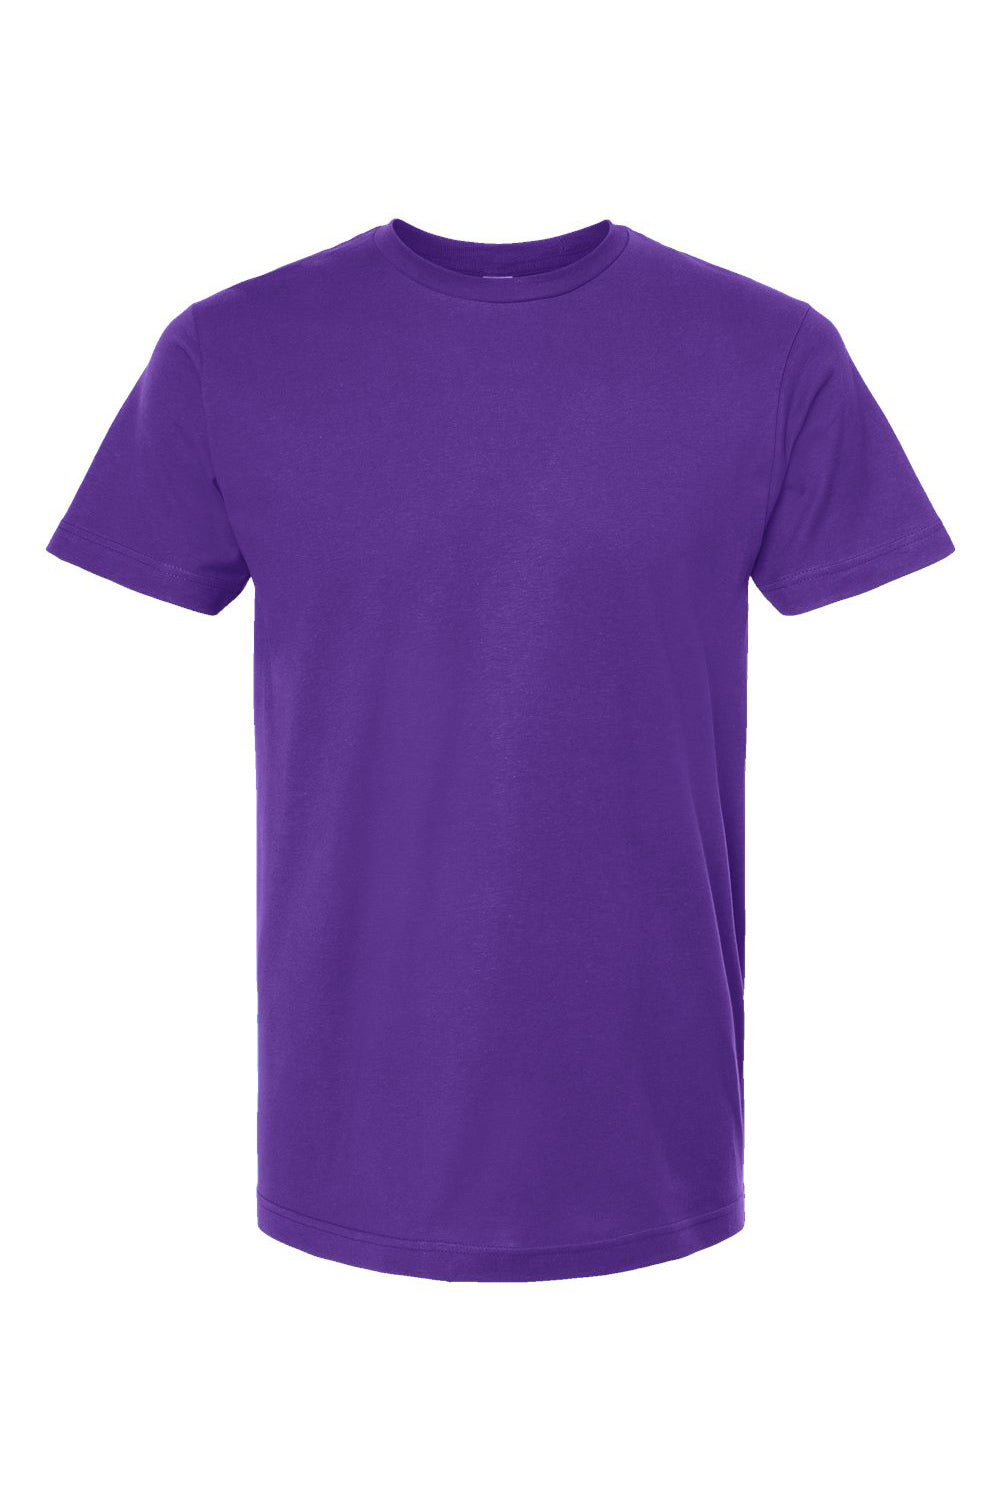 Tultex 202 Mens Fine Jersey Short Sleeve Crewneck T-Shirt Purple Flat Front